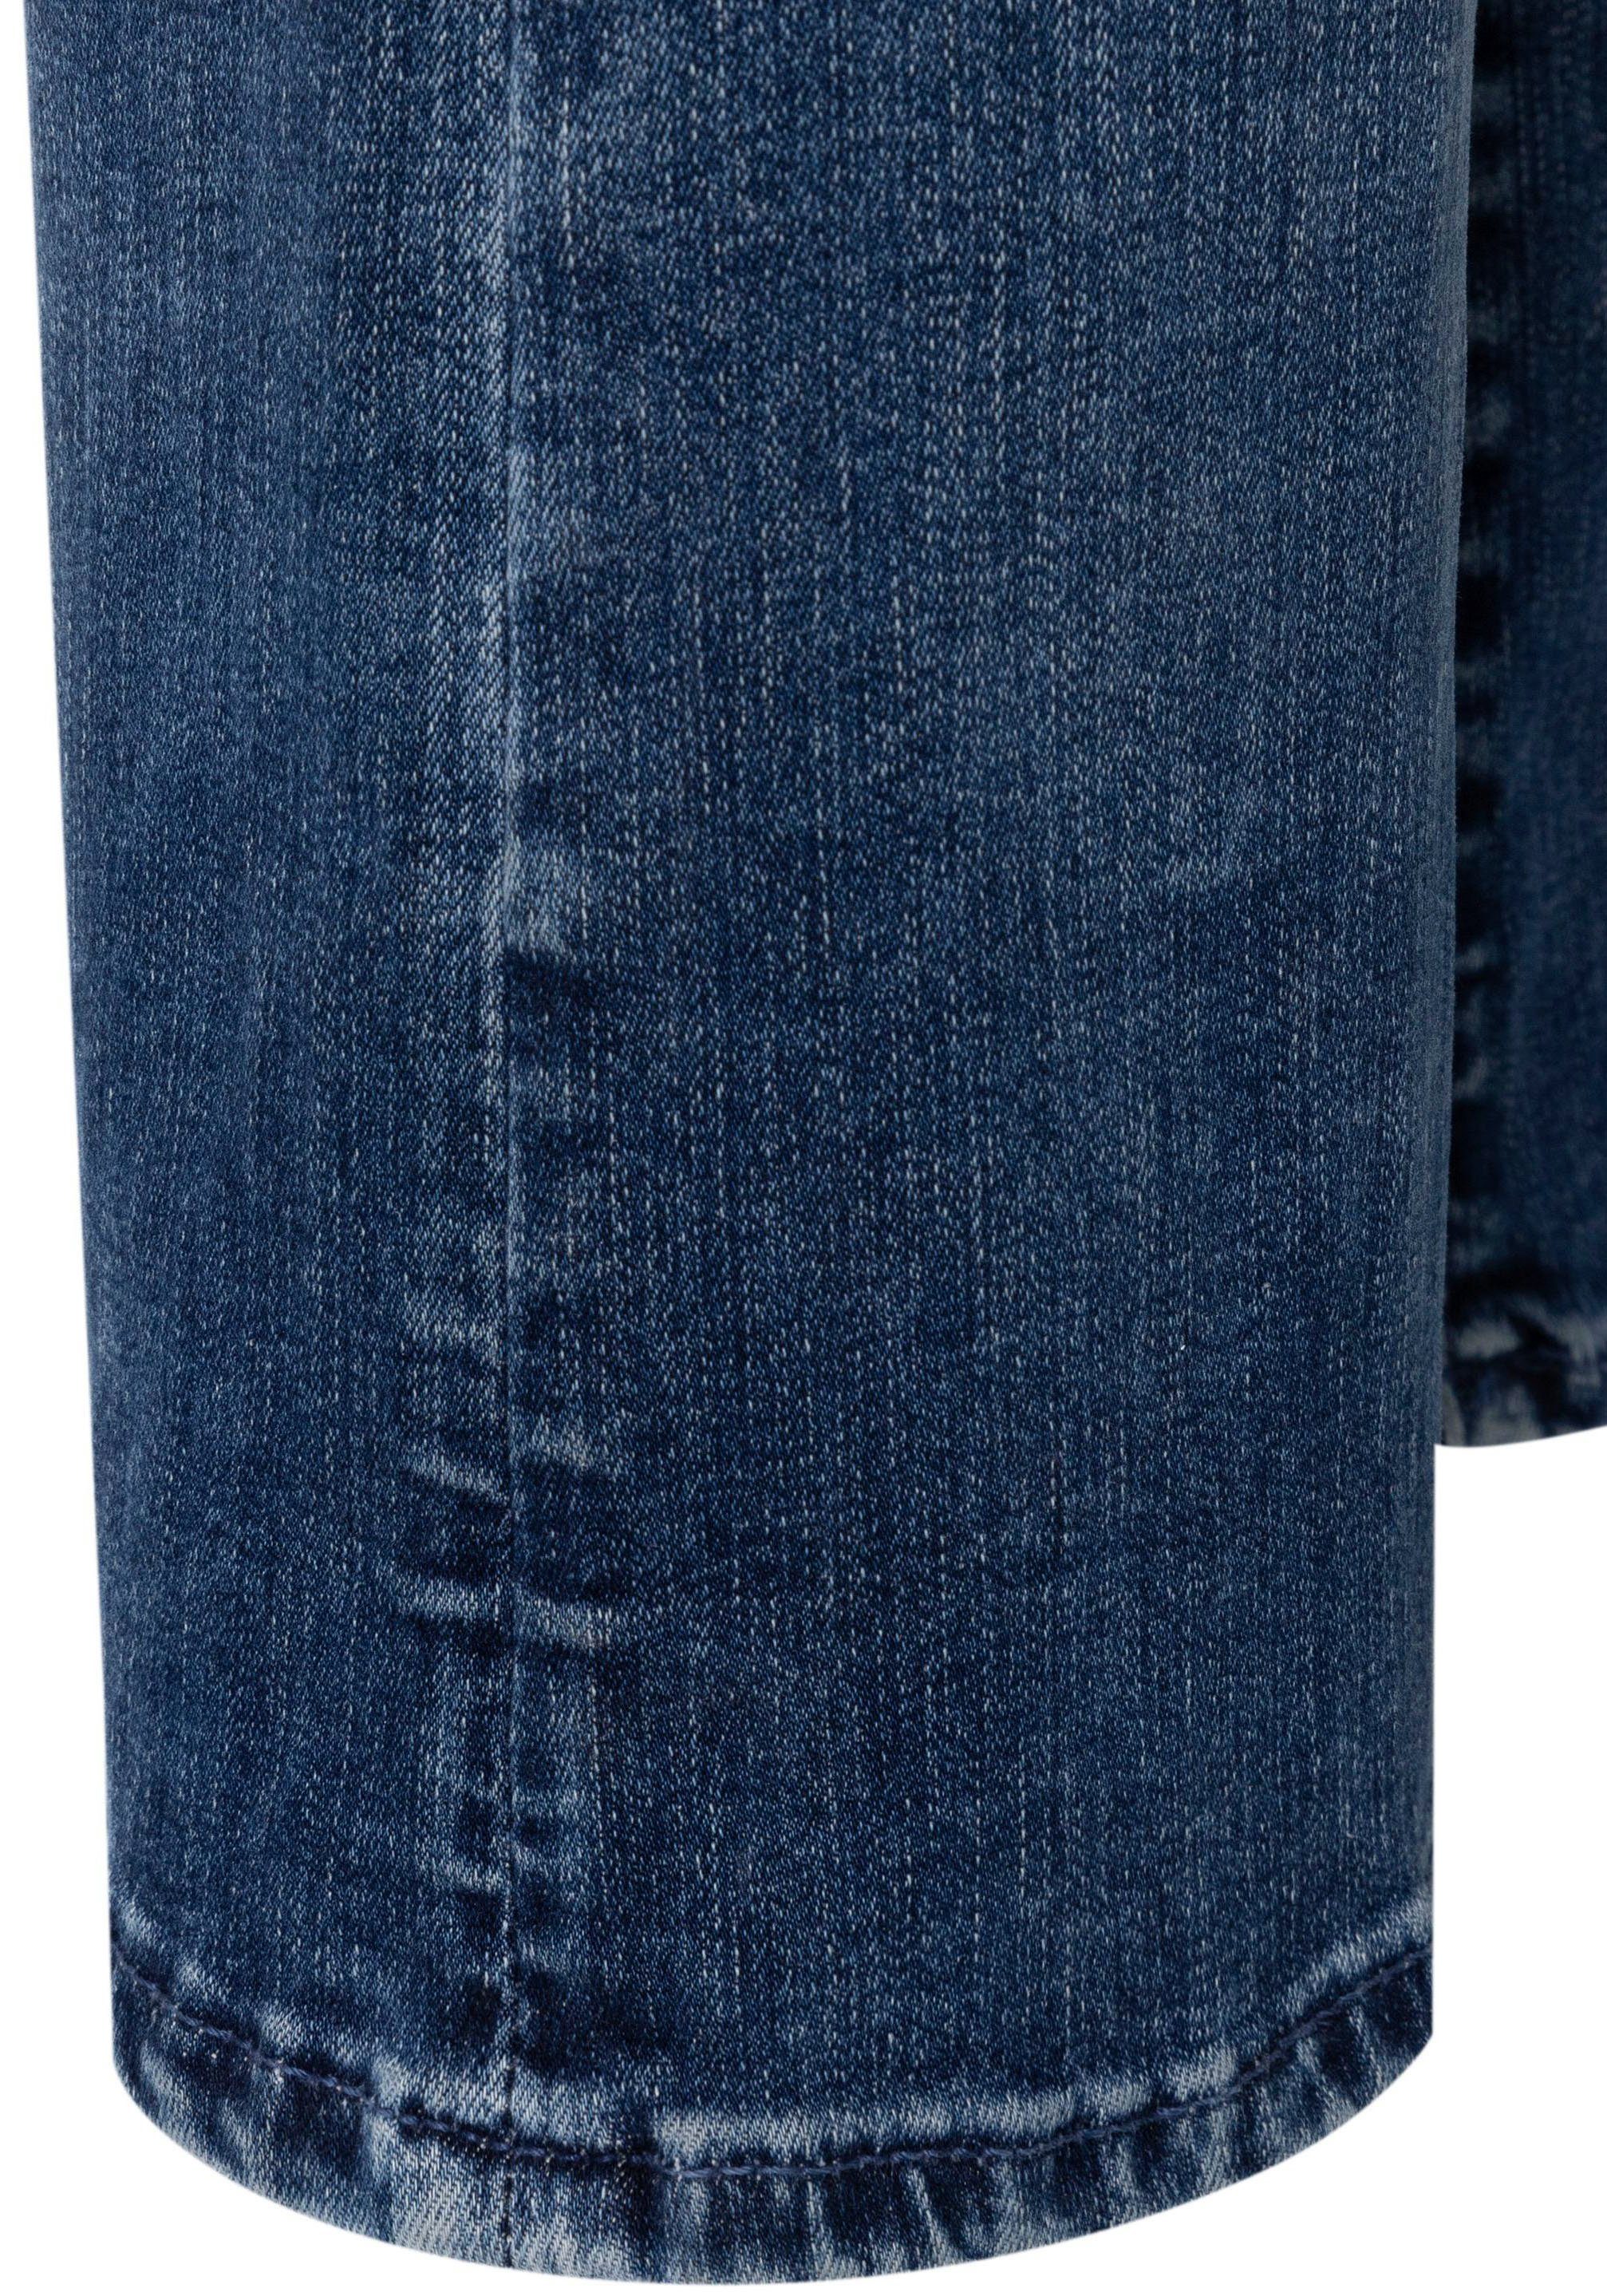 MAC Saum blue verkürzt ausgestellt 3/4-Jeans Dream dk modisch Kick washed leicht und